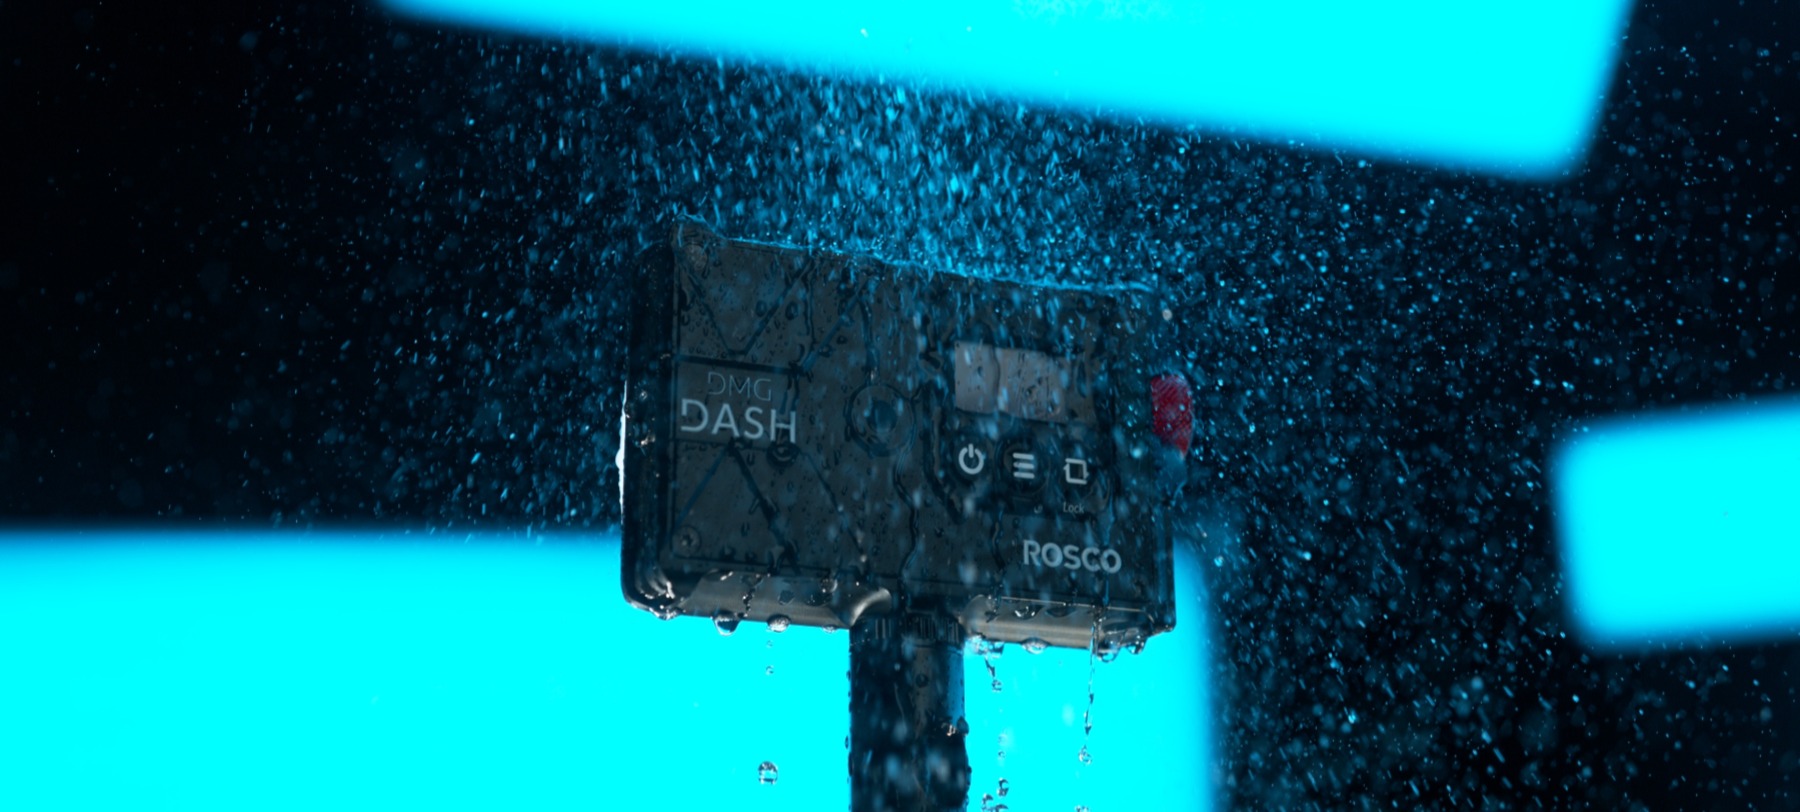 Rosco DMG Dash water